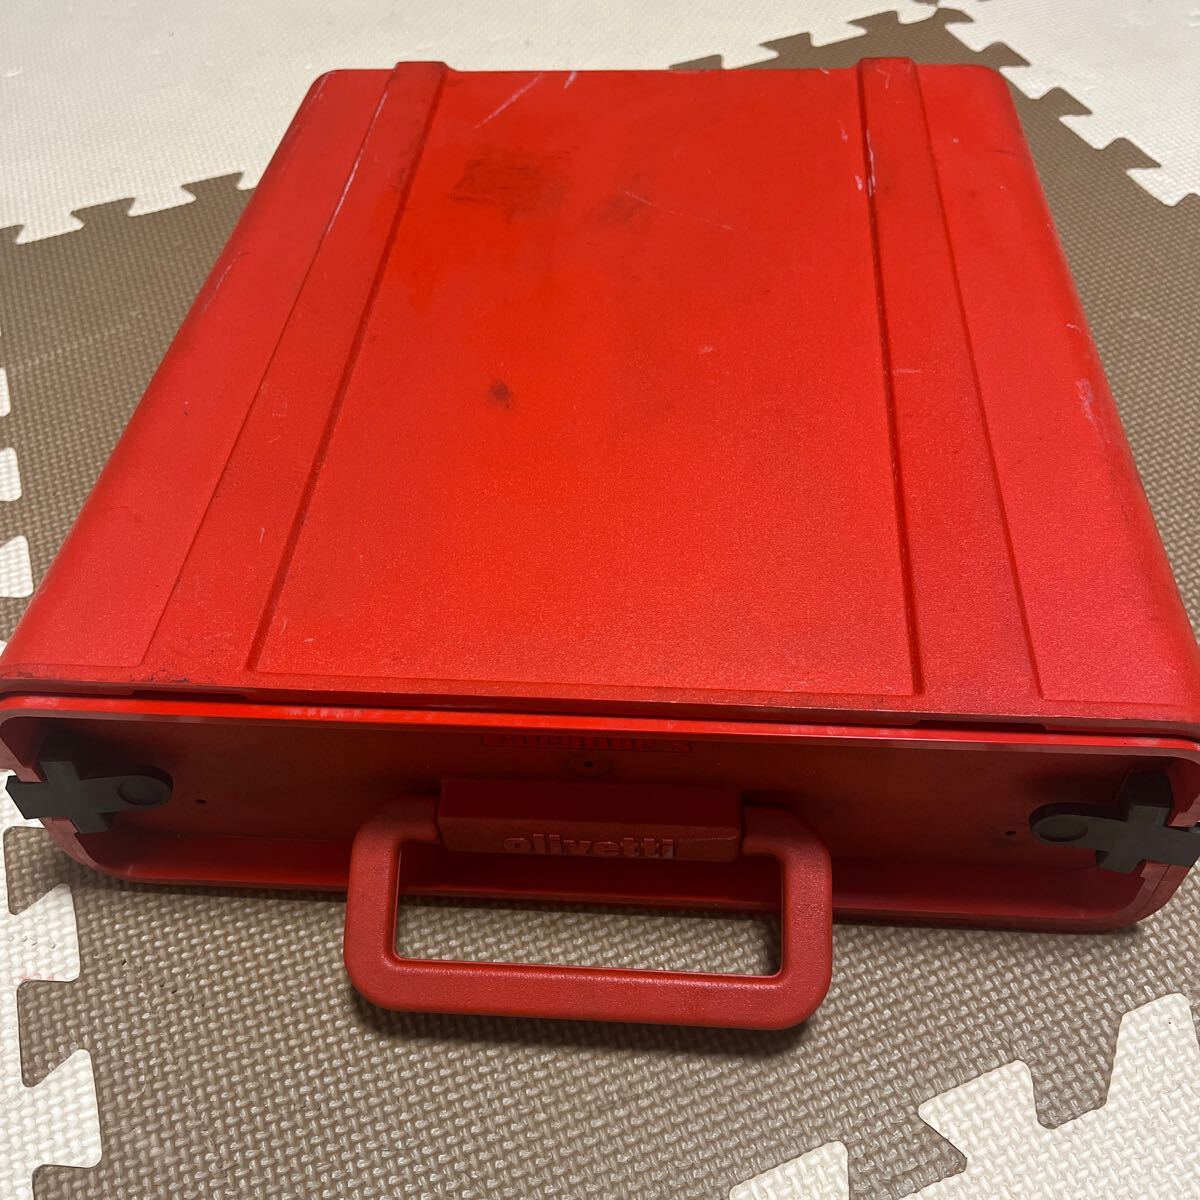 Olivetti valentine オリベッティ バレンタイン タイプライター 赤バケツ ヴィンテージ アンティーク 現状品 レトロの画像1